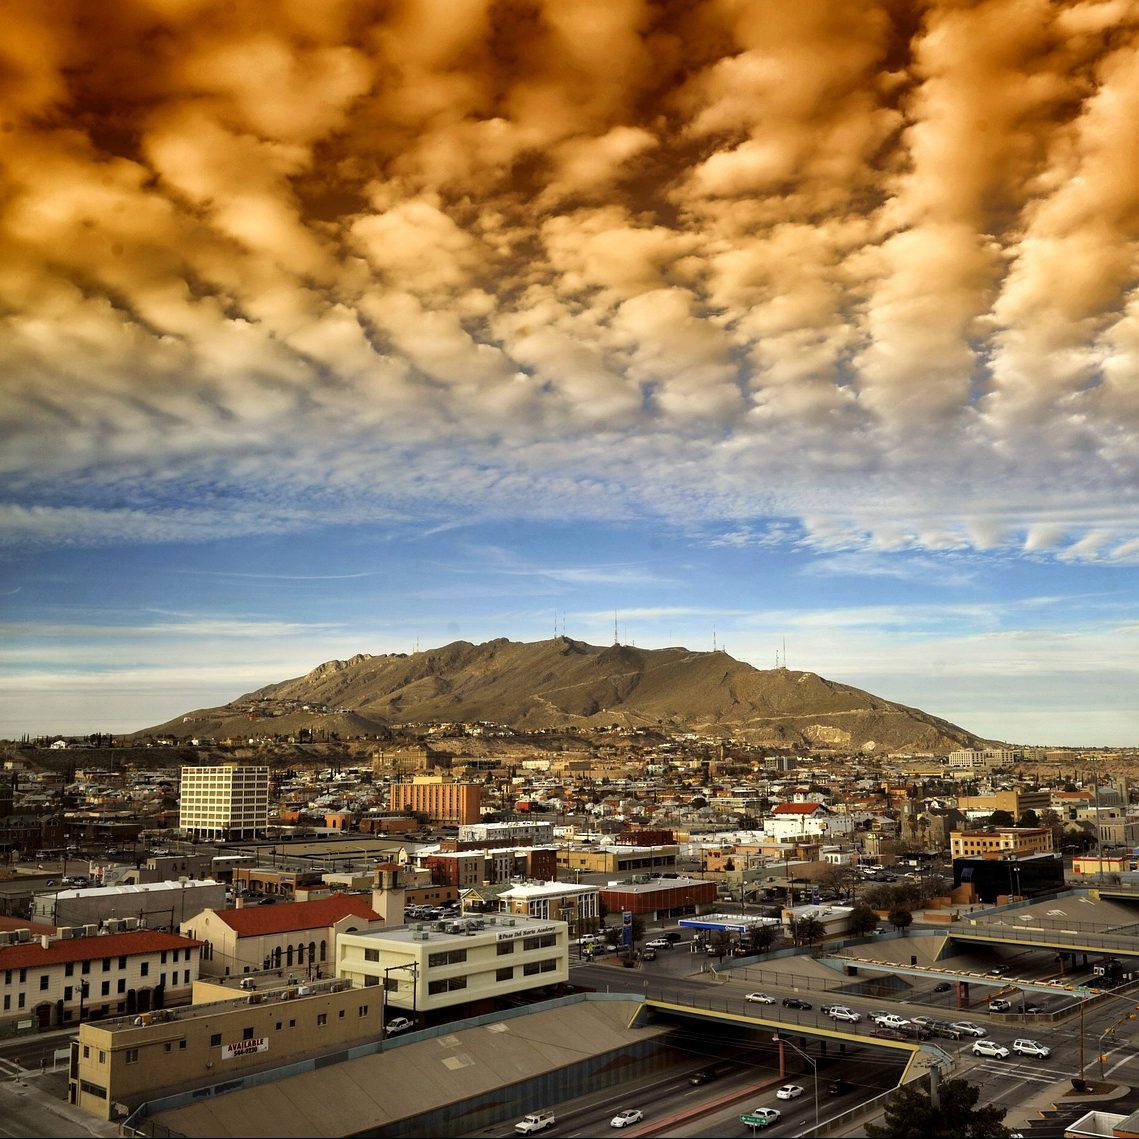 Digitally enhanced photograph of clouds over El Paso, Texas cityscape.